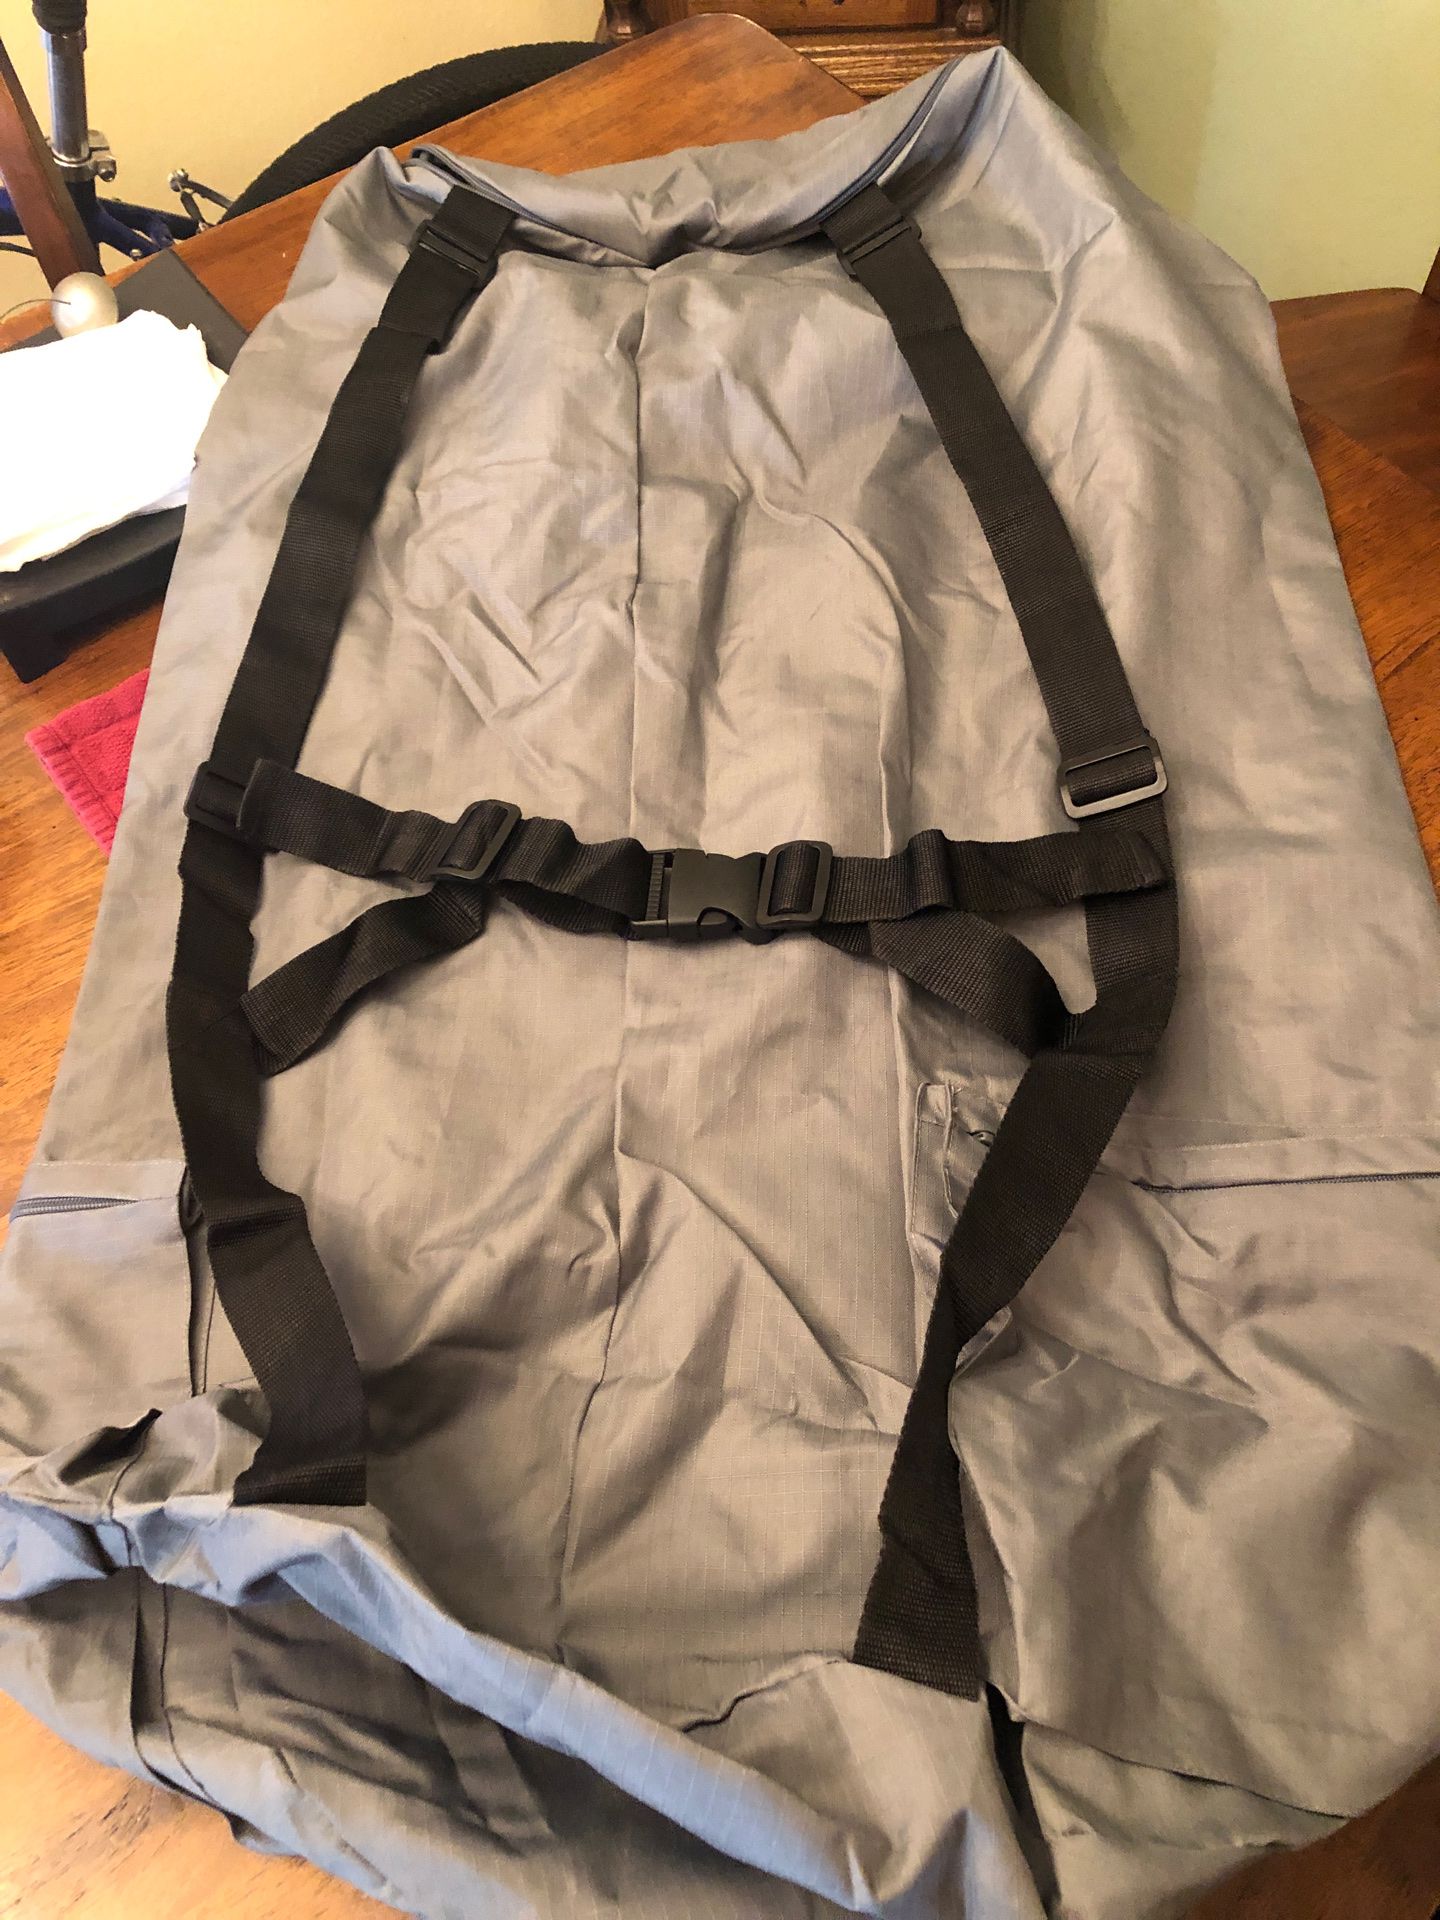 Duffel bag backpack